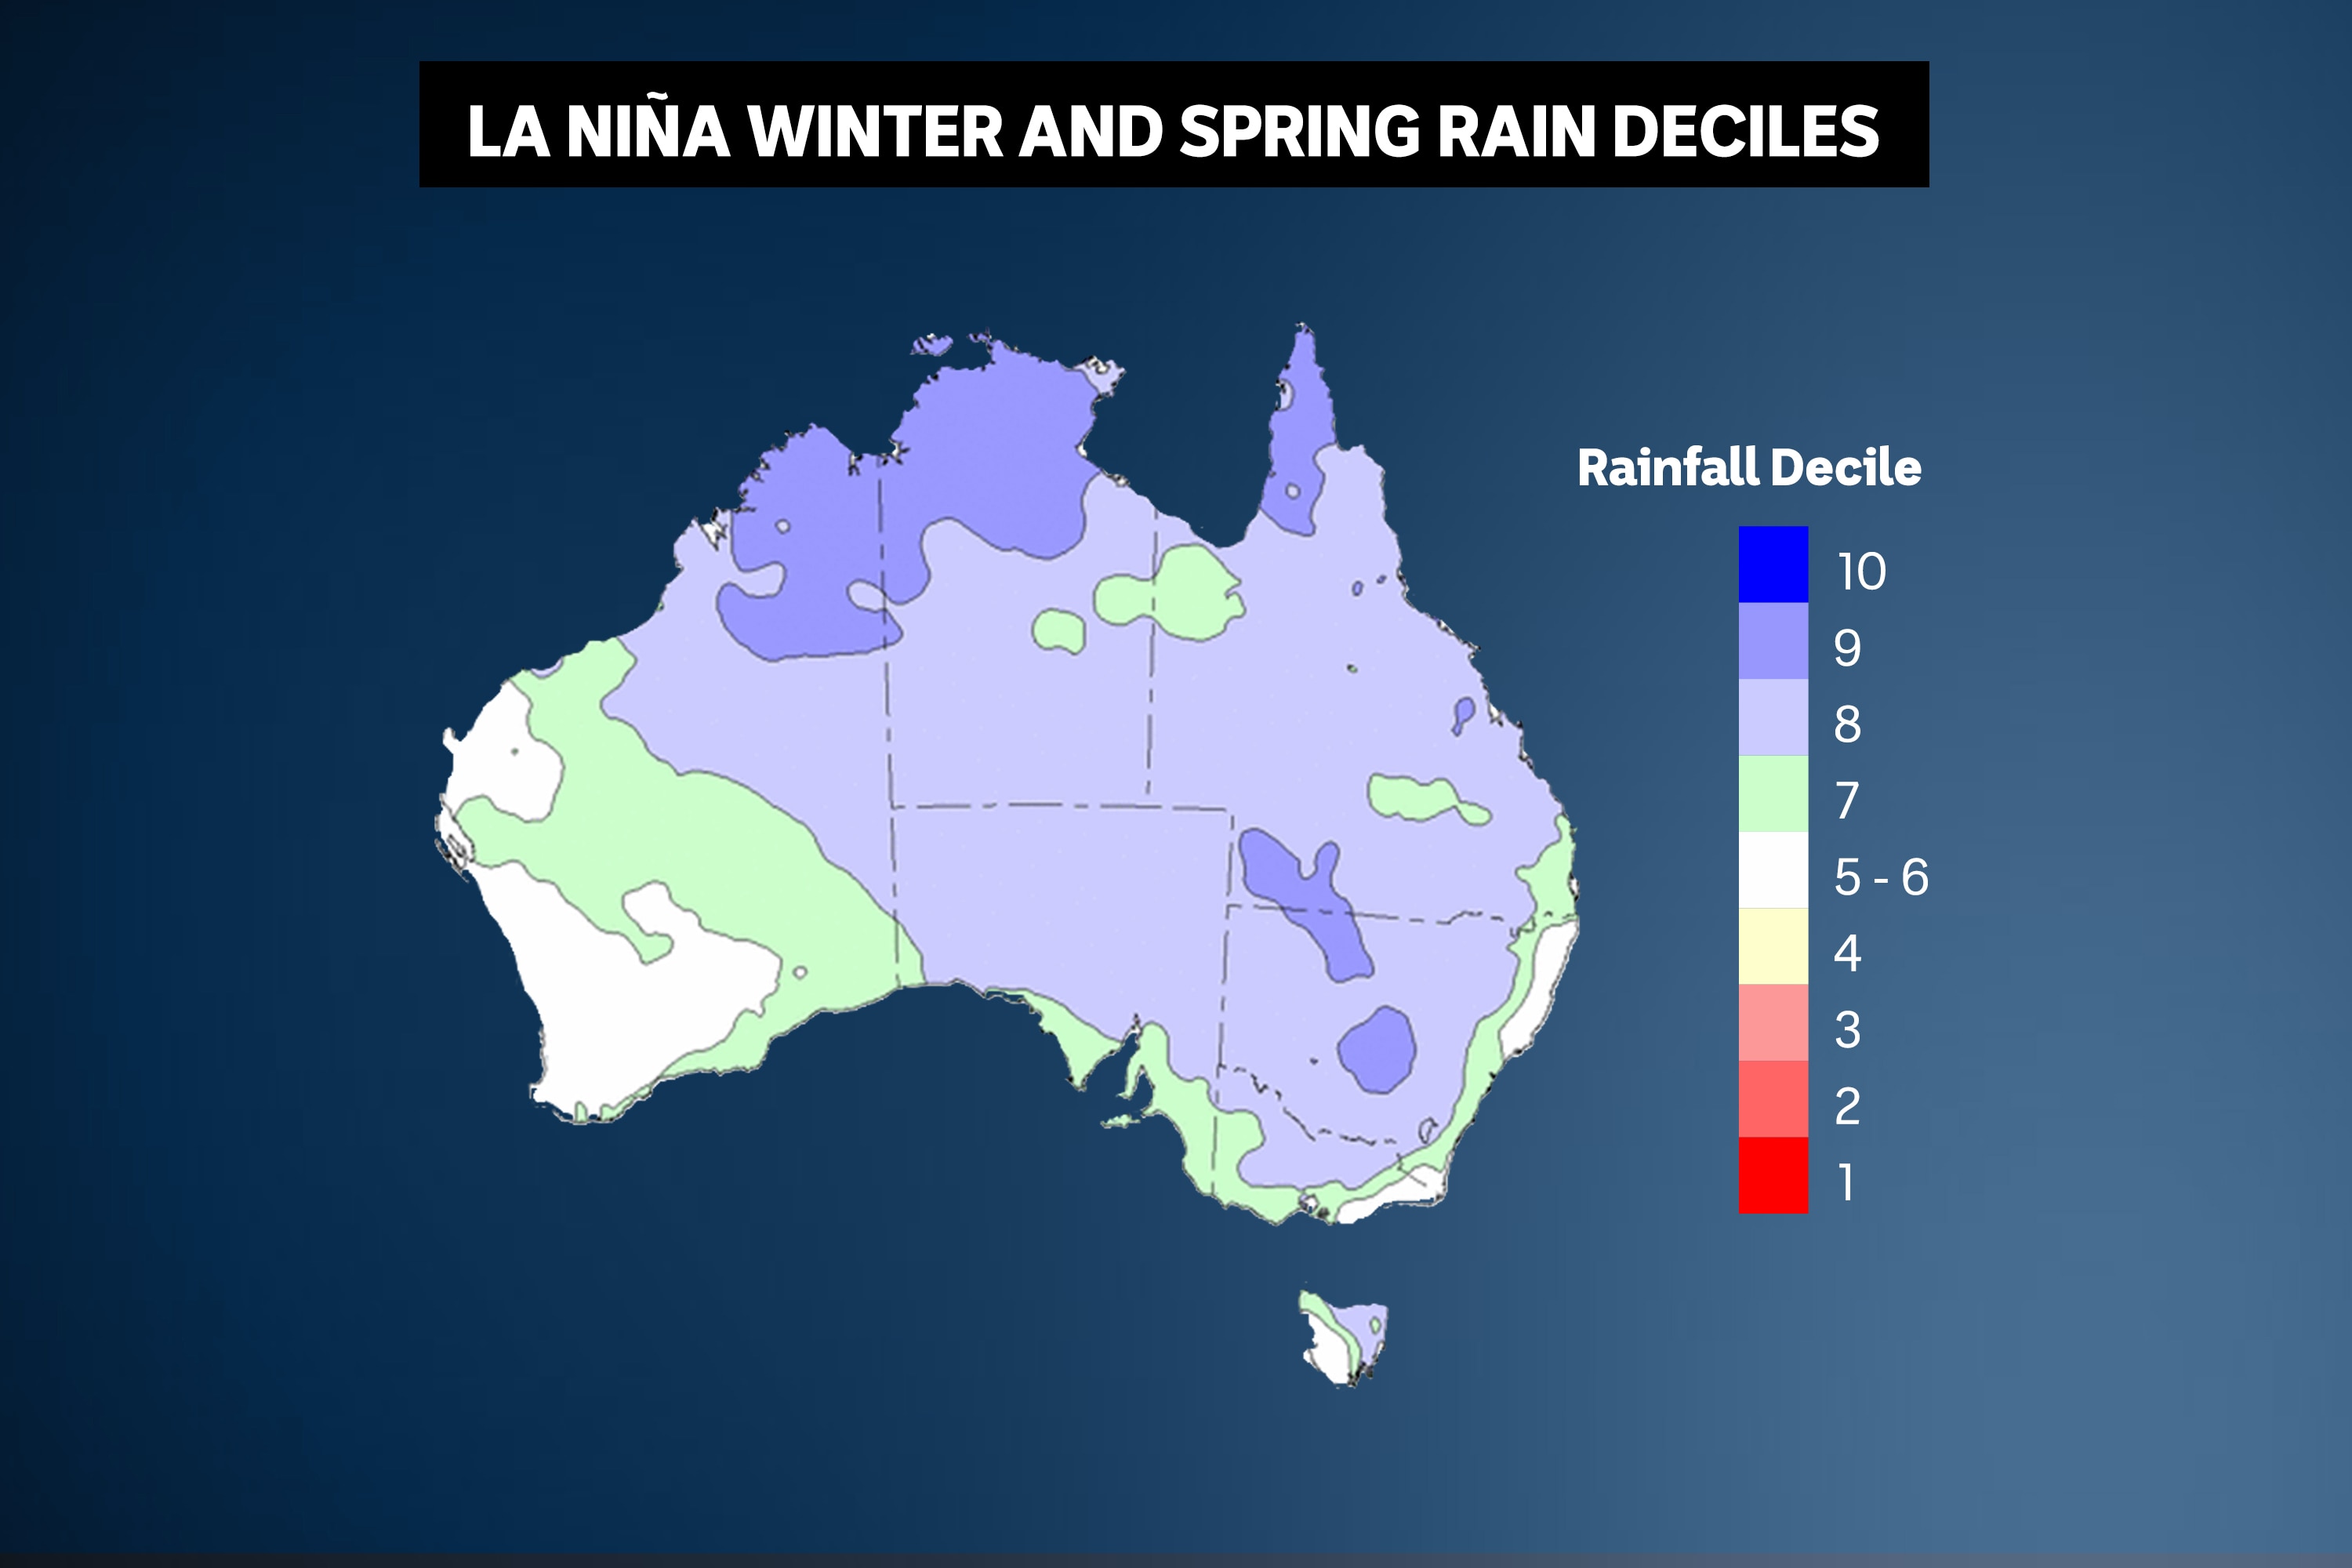 A map of Australia showing rainfall decile levels